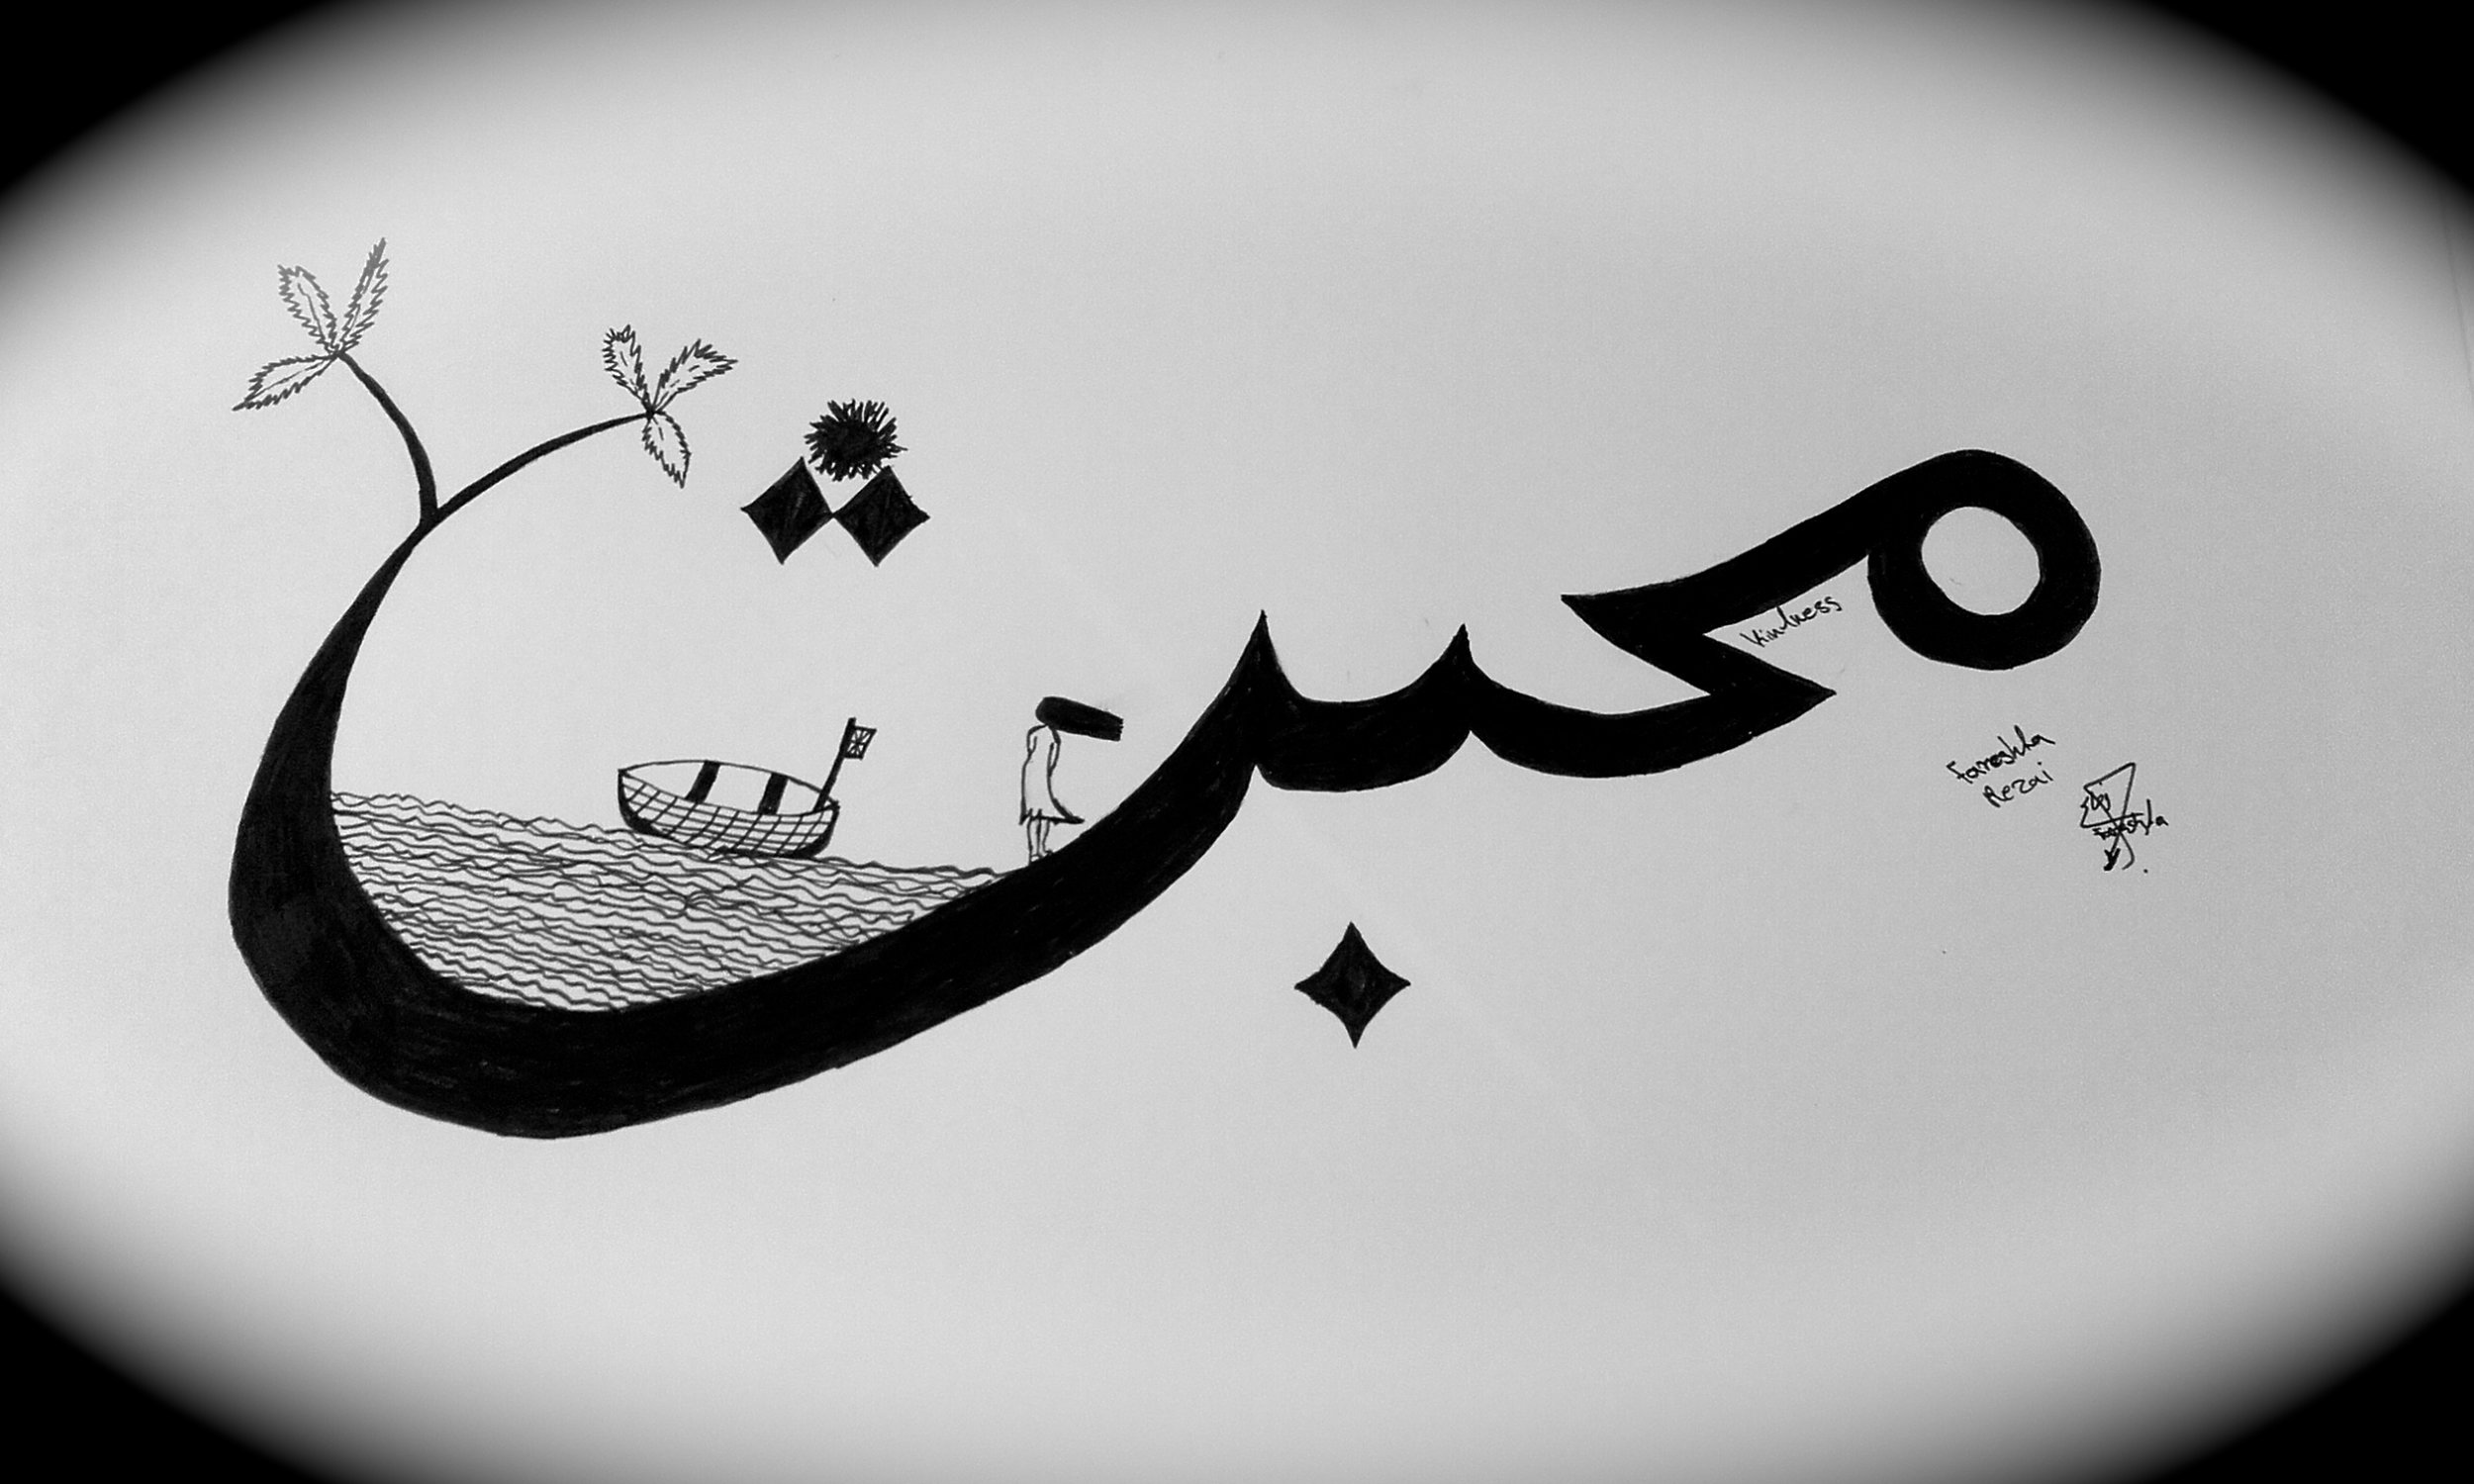 Farsi poetic ink drawing